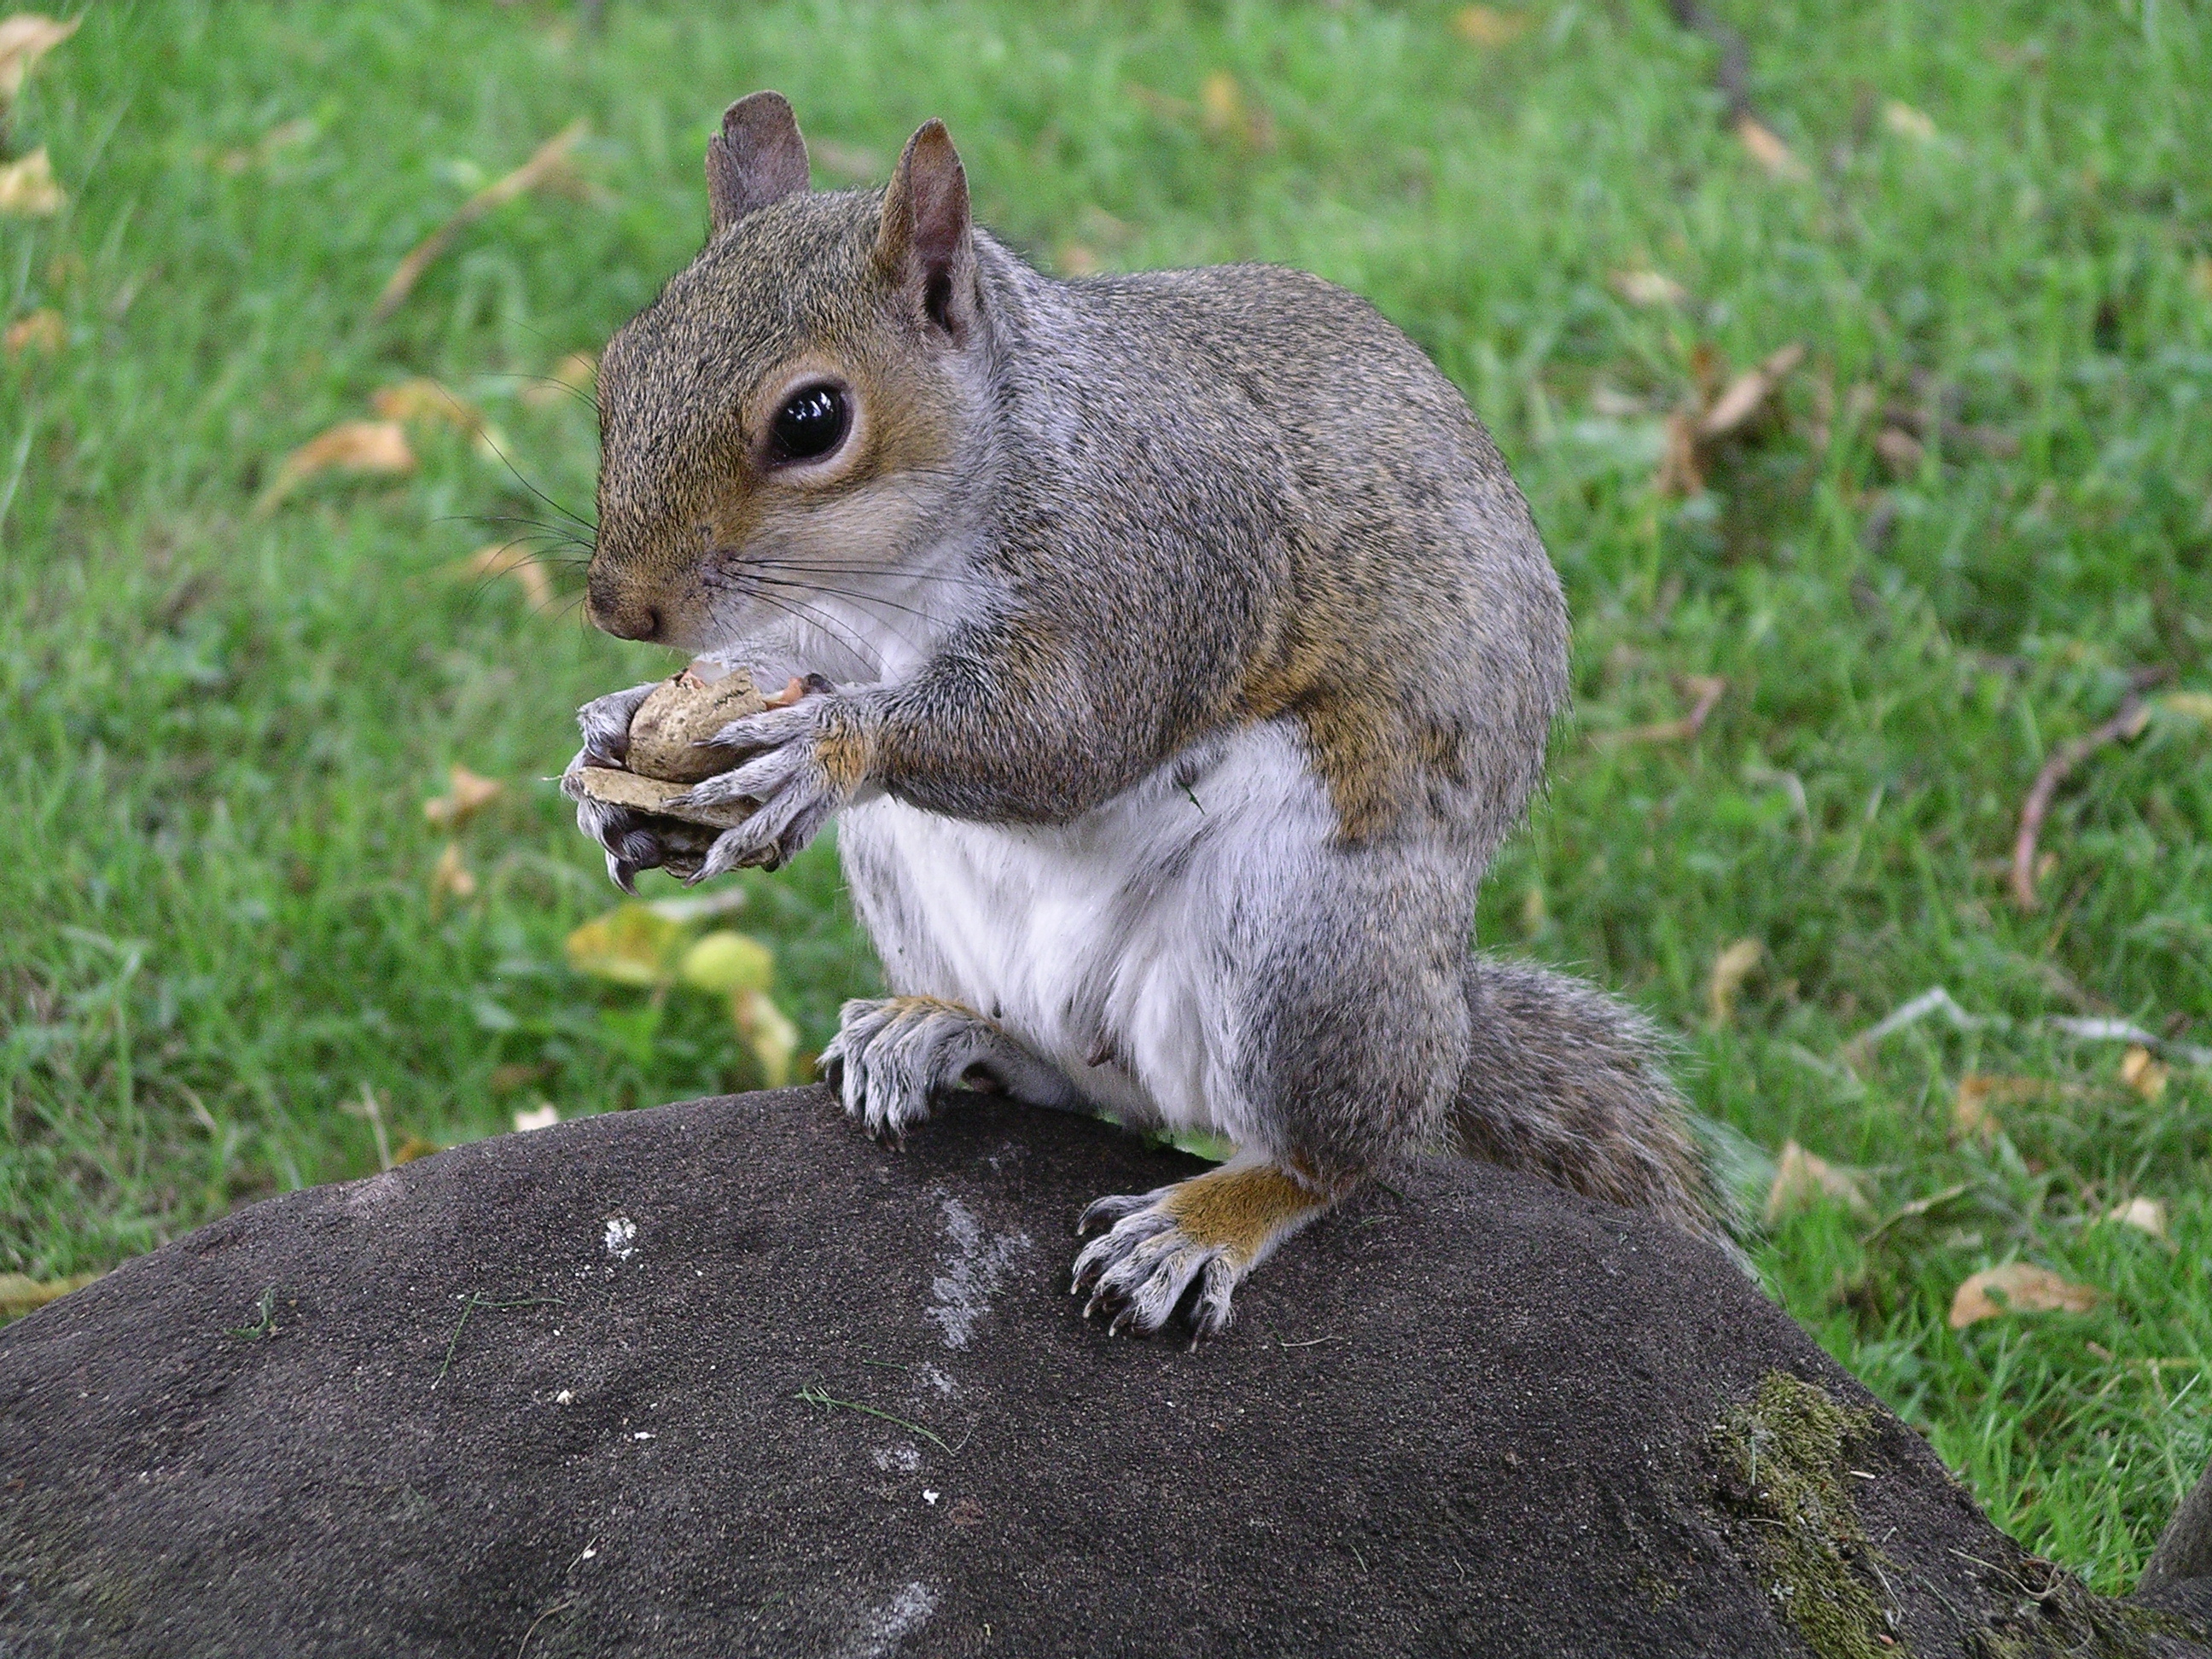 File:Squirrel eating peanut 12u07.JPG - Wikimedia Commons